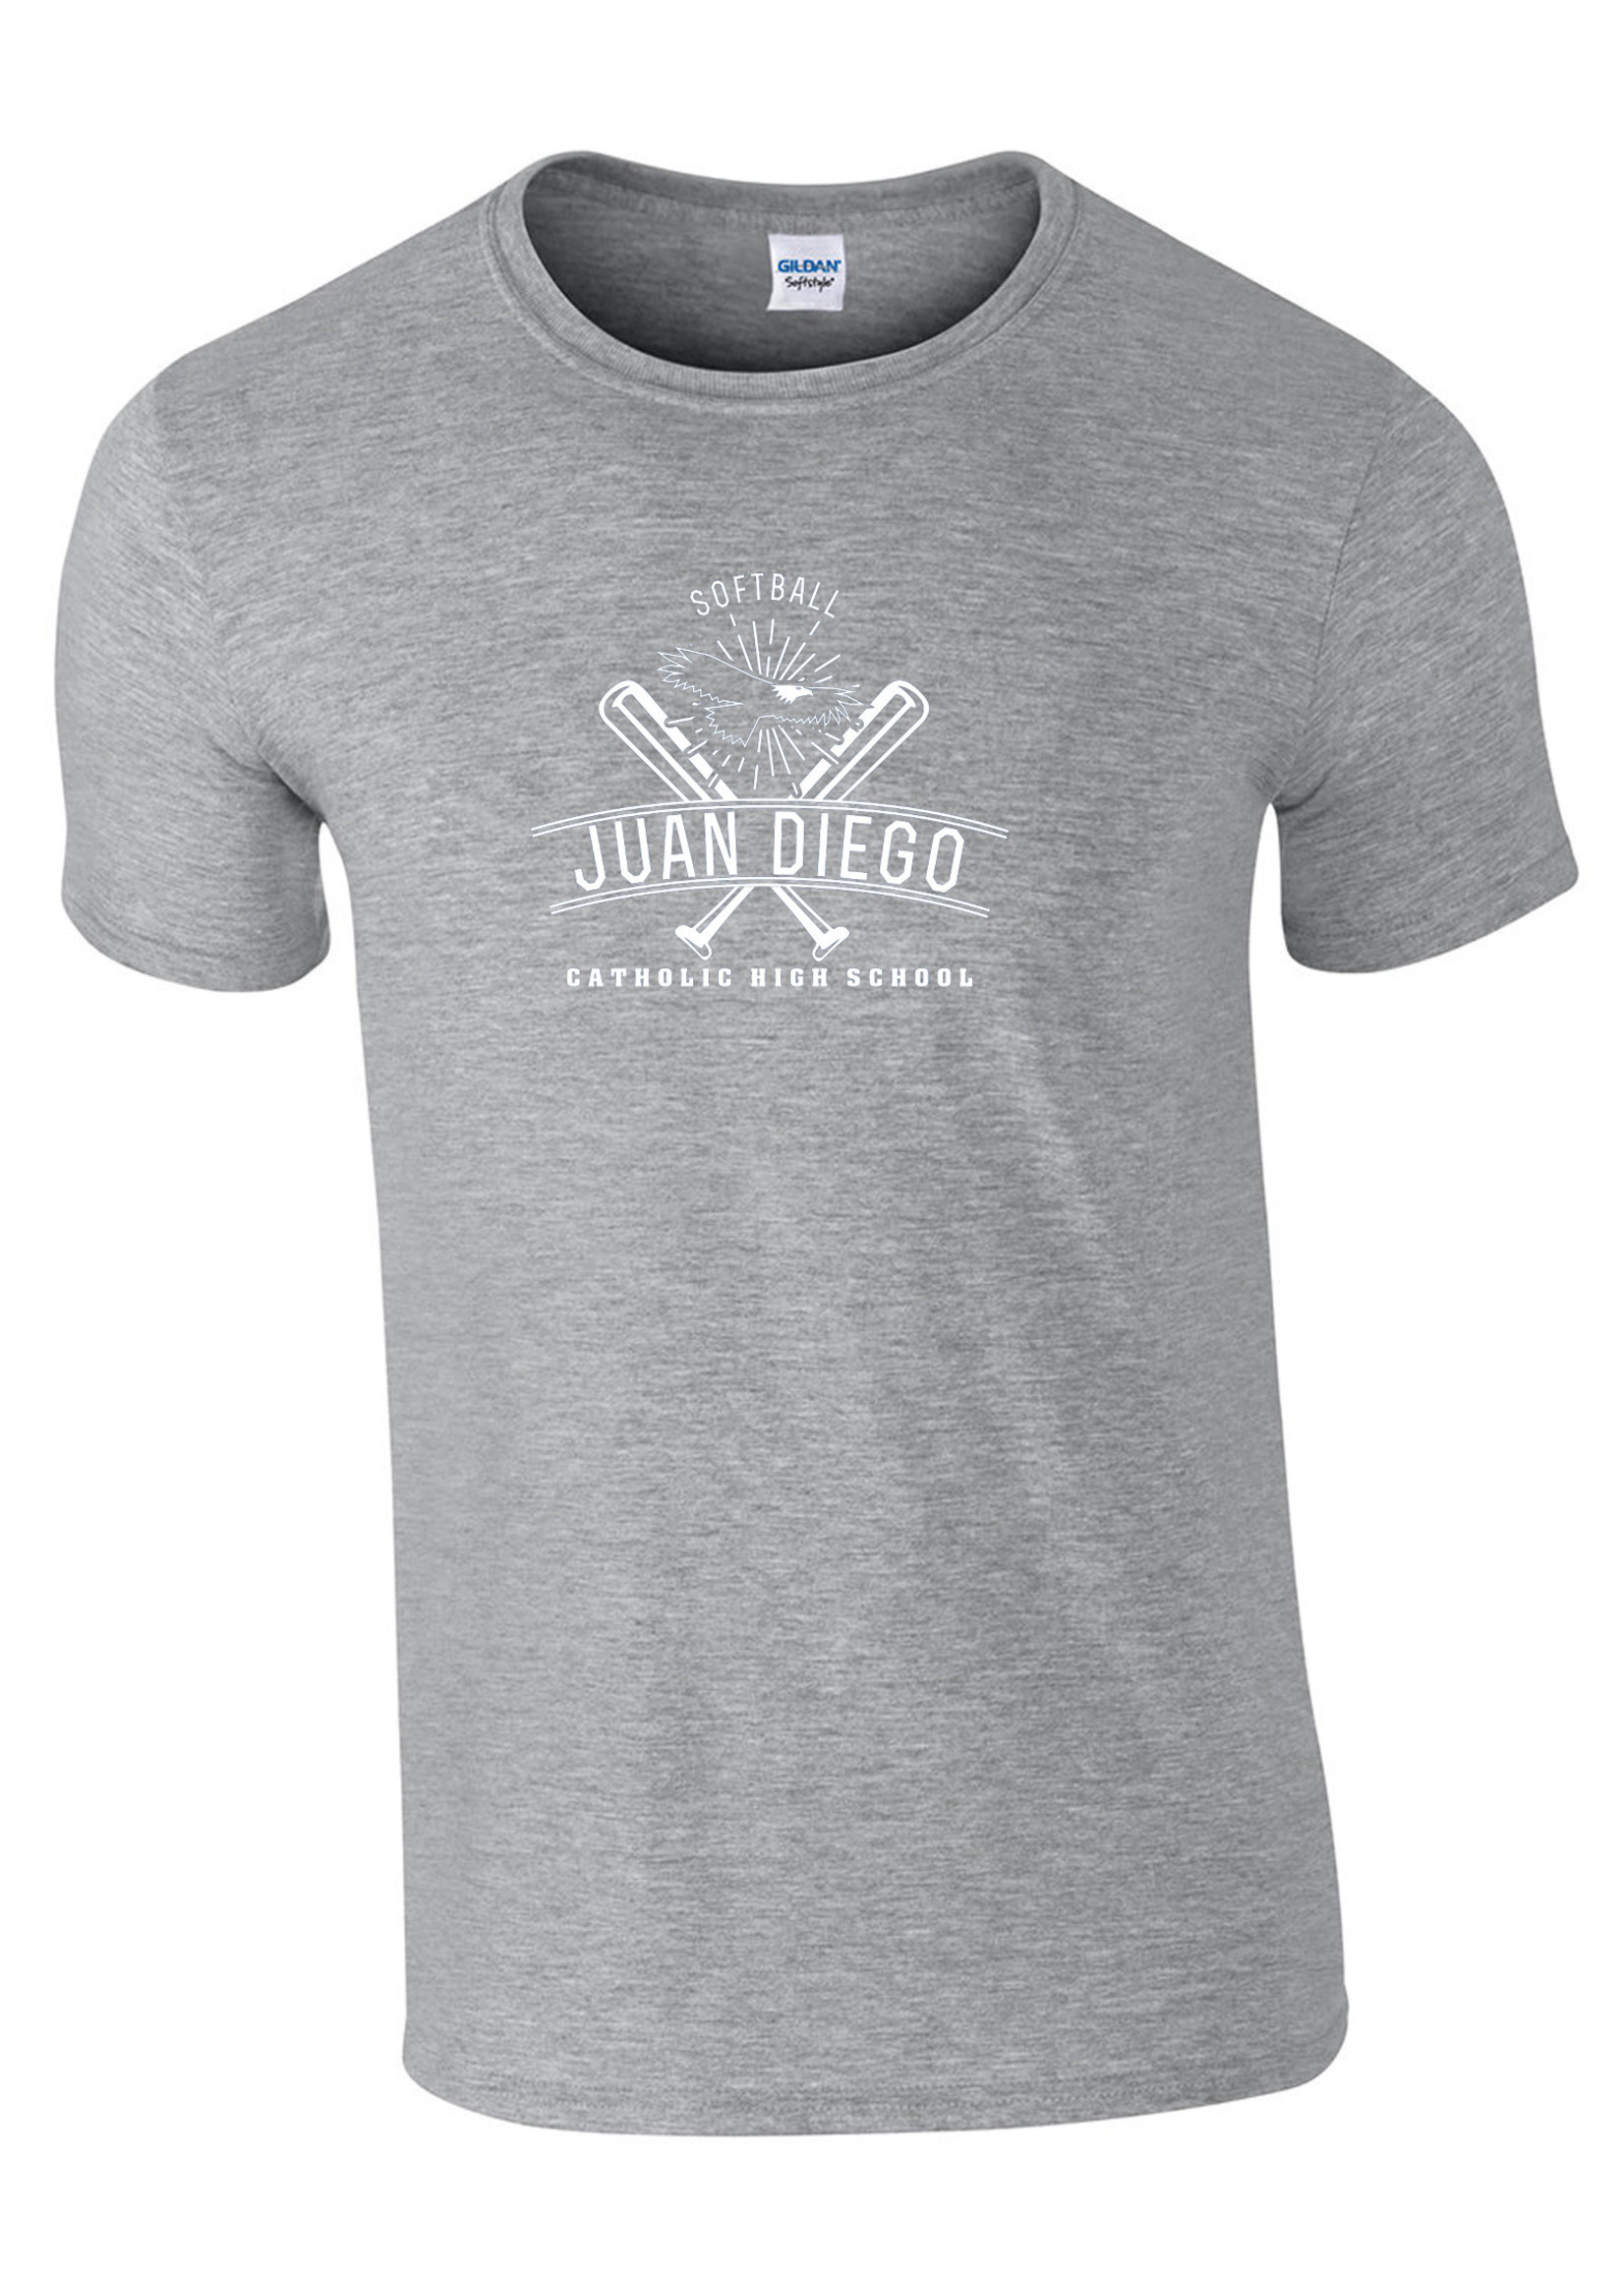 NON-UNIFORM JD Softball Spirit T-Shirt, legacy bat design